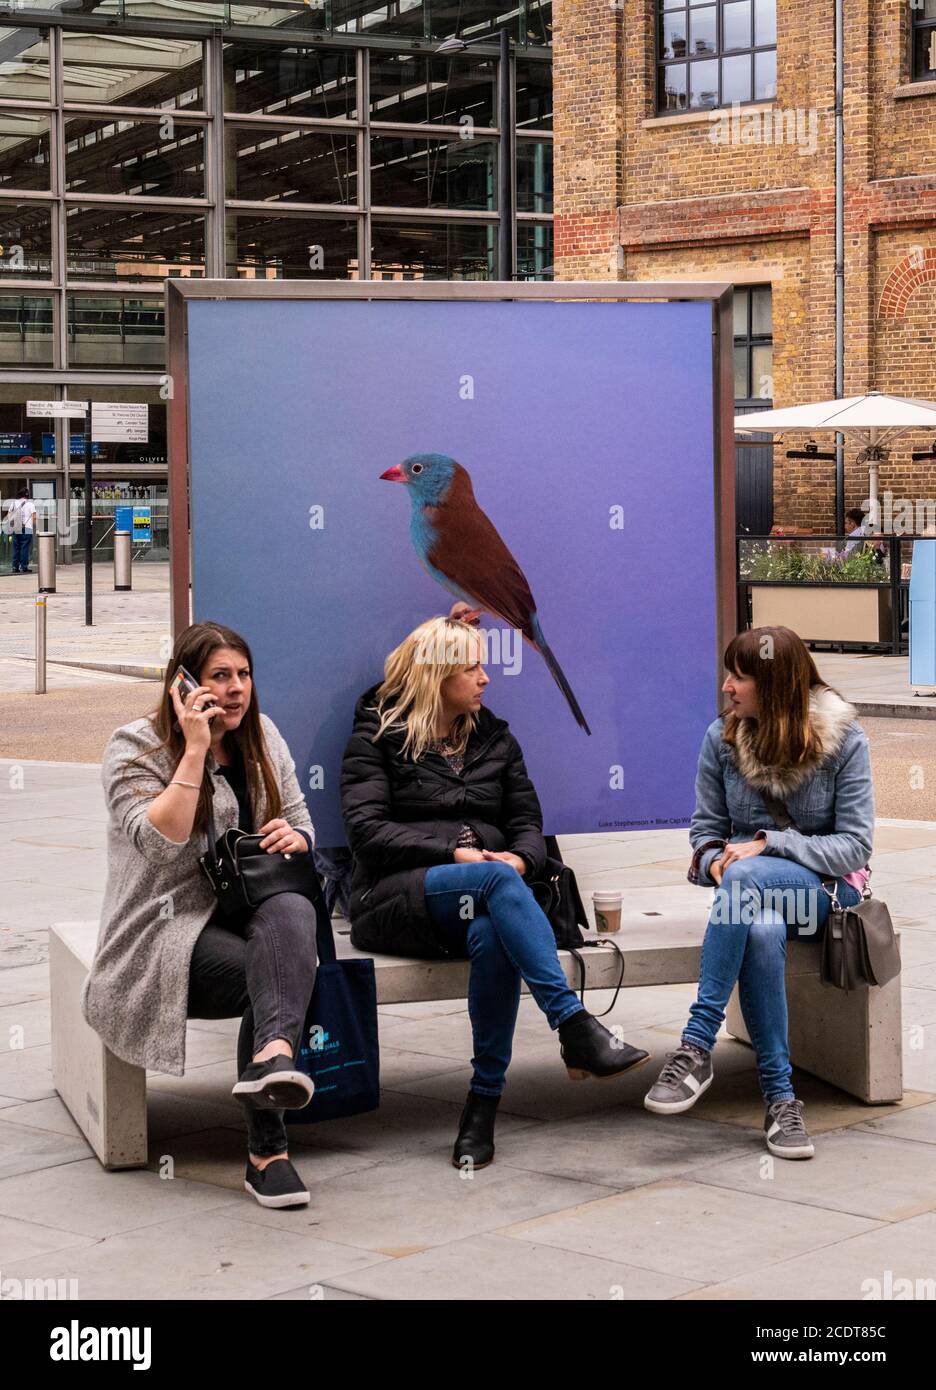 Three women sitting on bench with bird on poster, Kings Cross, London, England Stock Photo